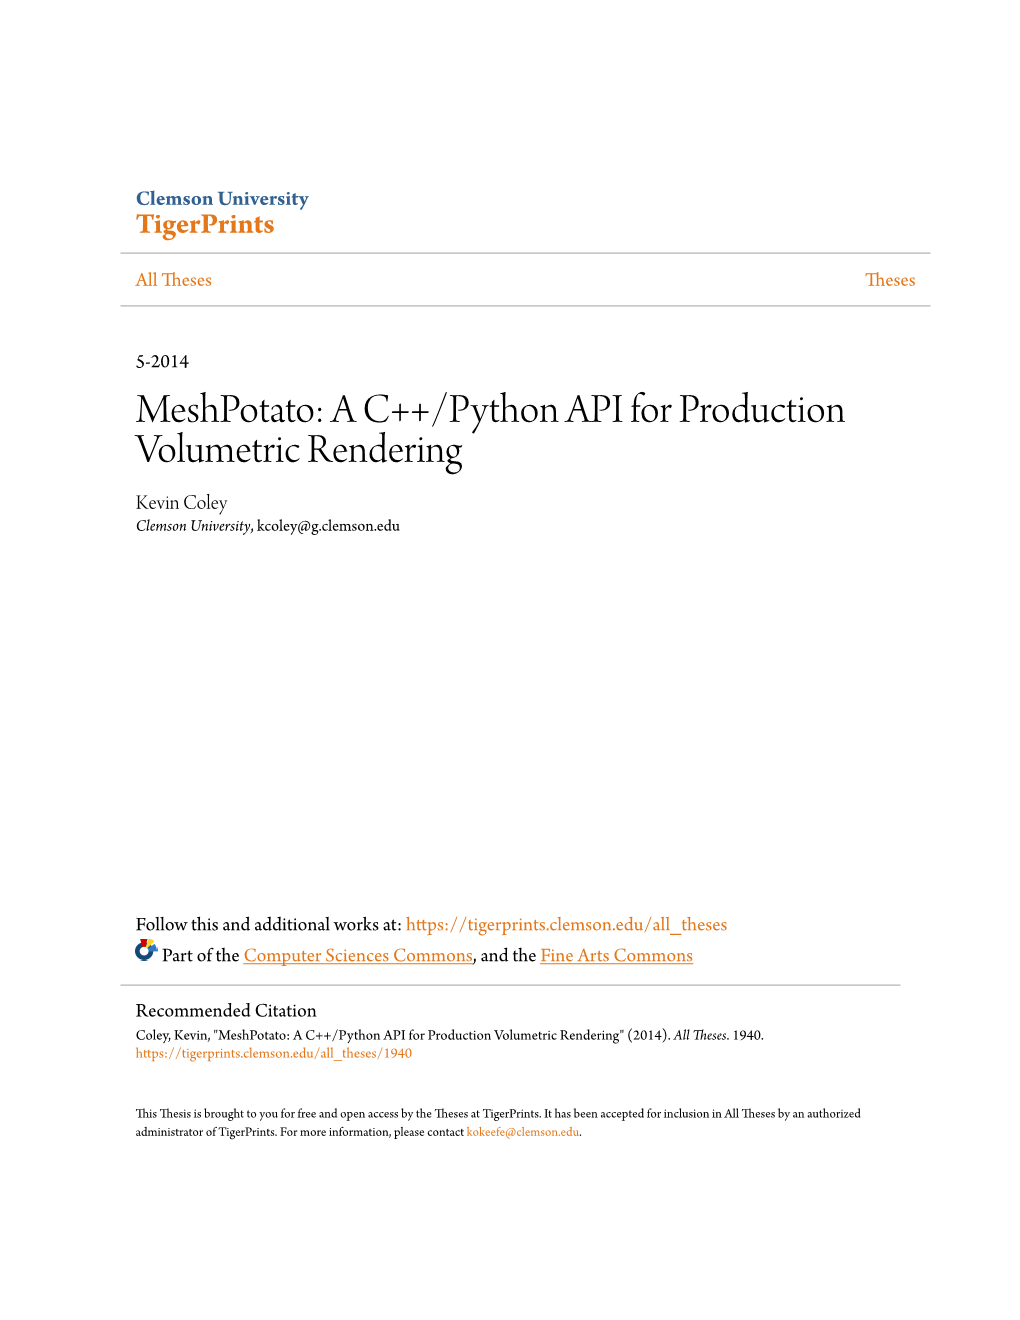 Meshpotato: a C++/Python API for Production Volumetric Rendering Kevin Coley Clemson University, Kcoley@G.Clemson.Edu